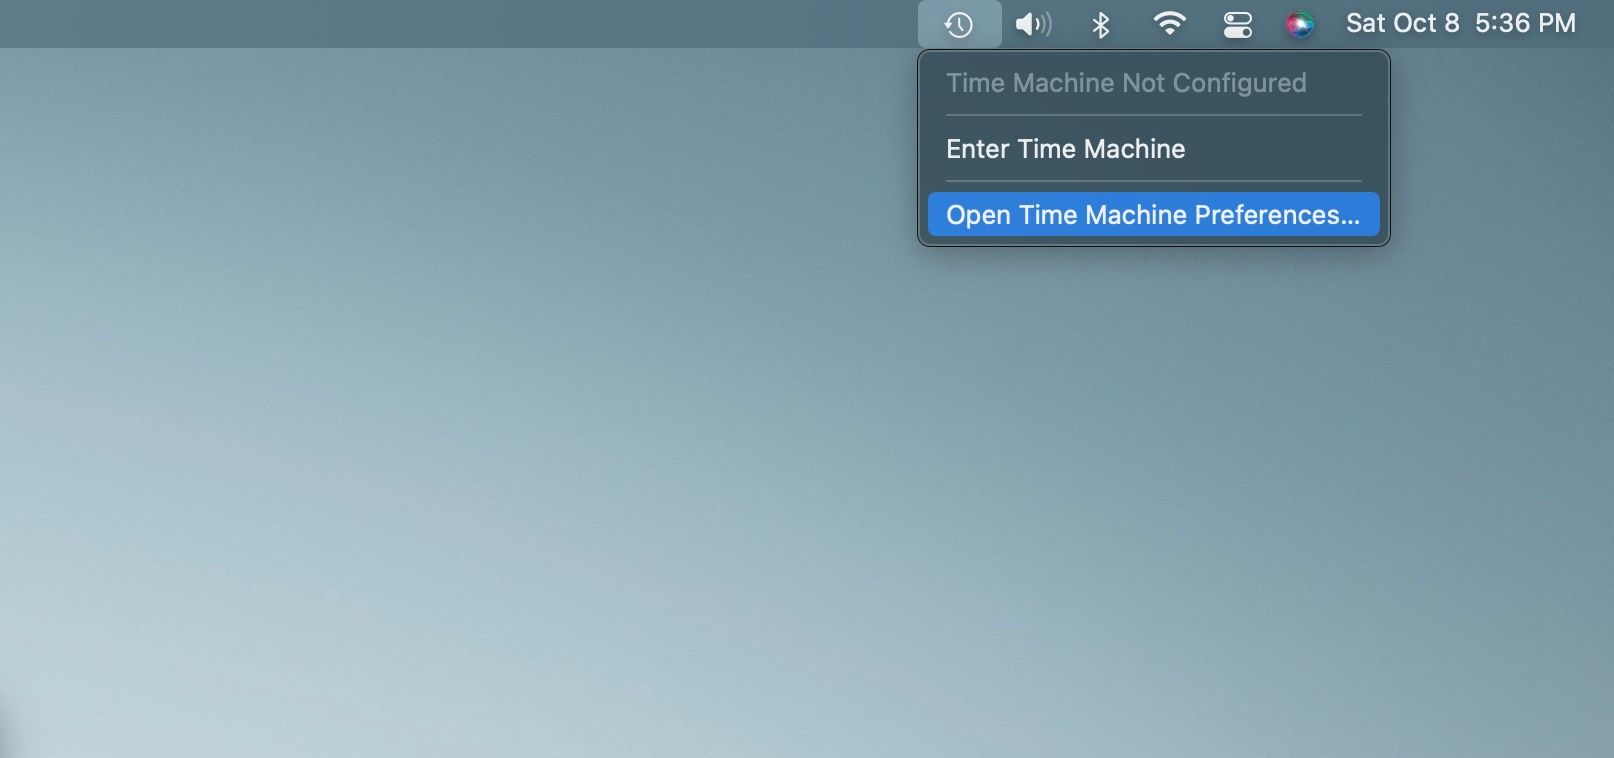 Time Machine Not Configured message in menu bar